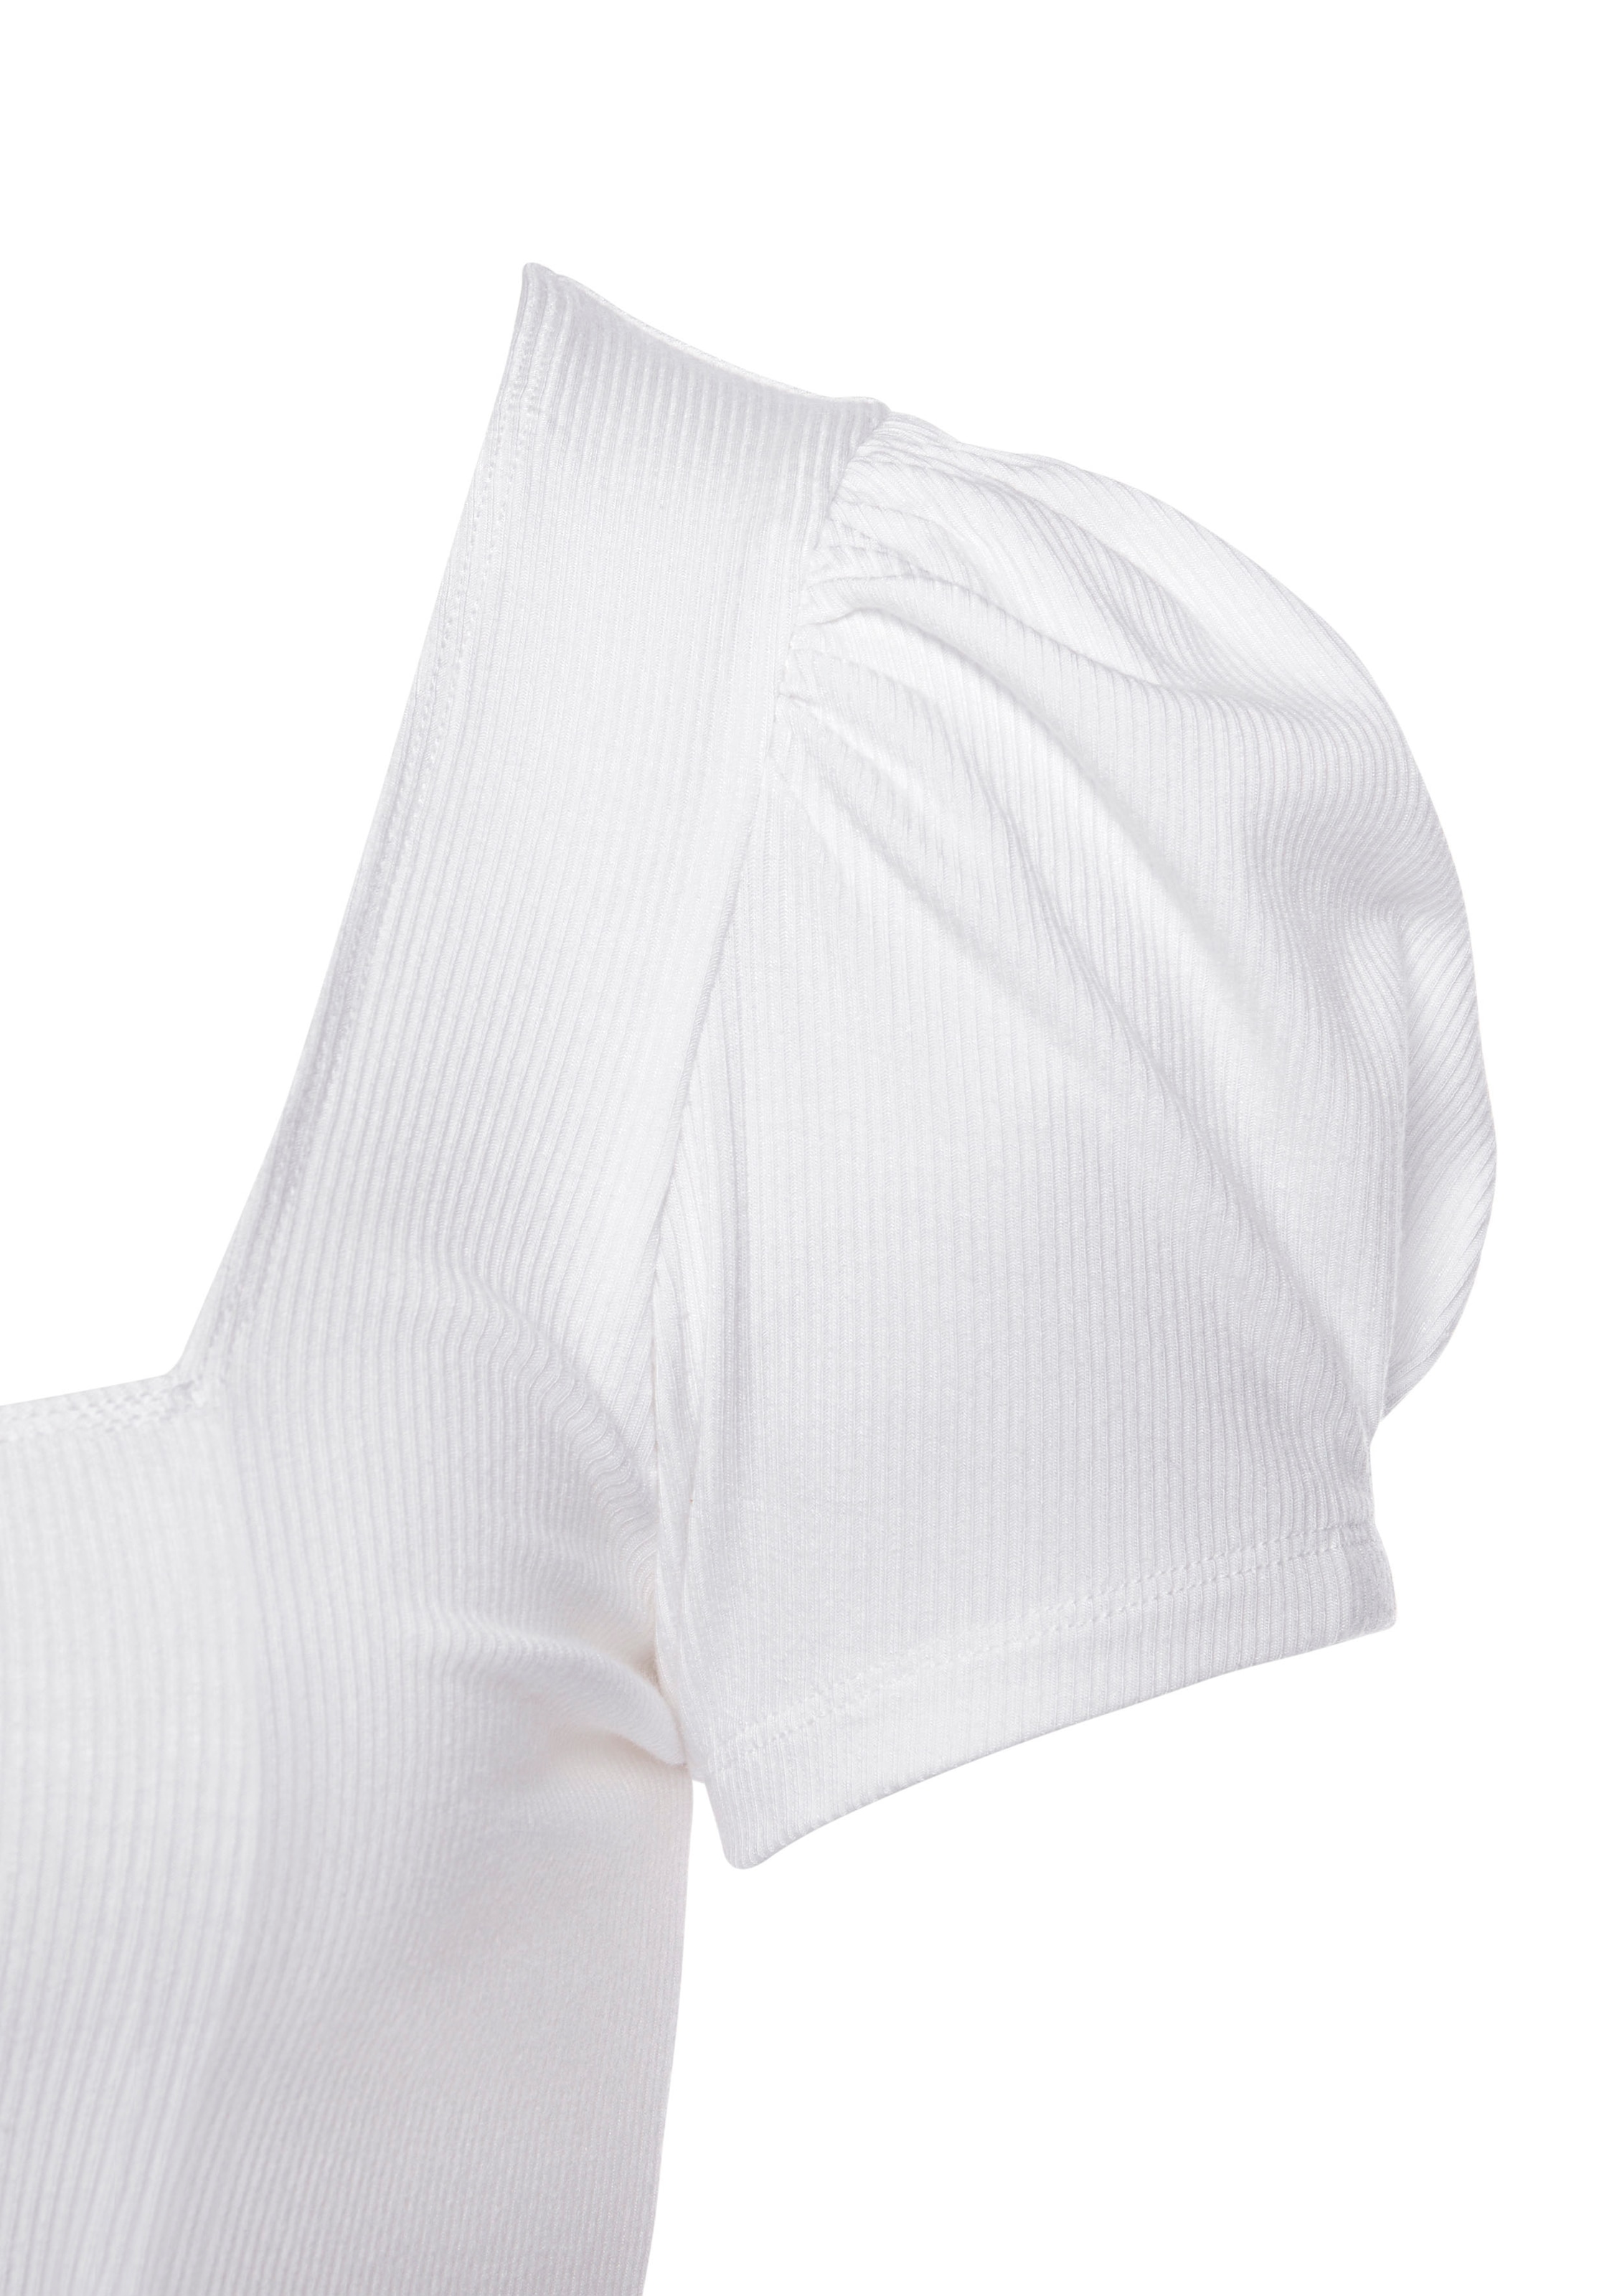 LASCANA Kurzarmshirt, aus gerippter Ware, T-Shirt mit leichten Puffärmeln, casual-elegant